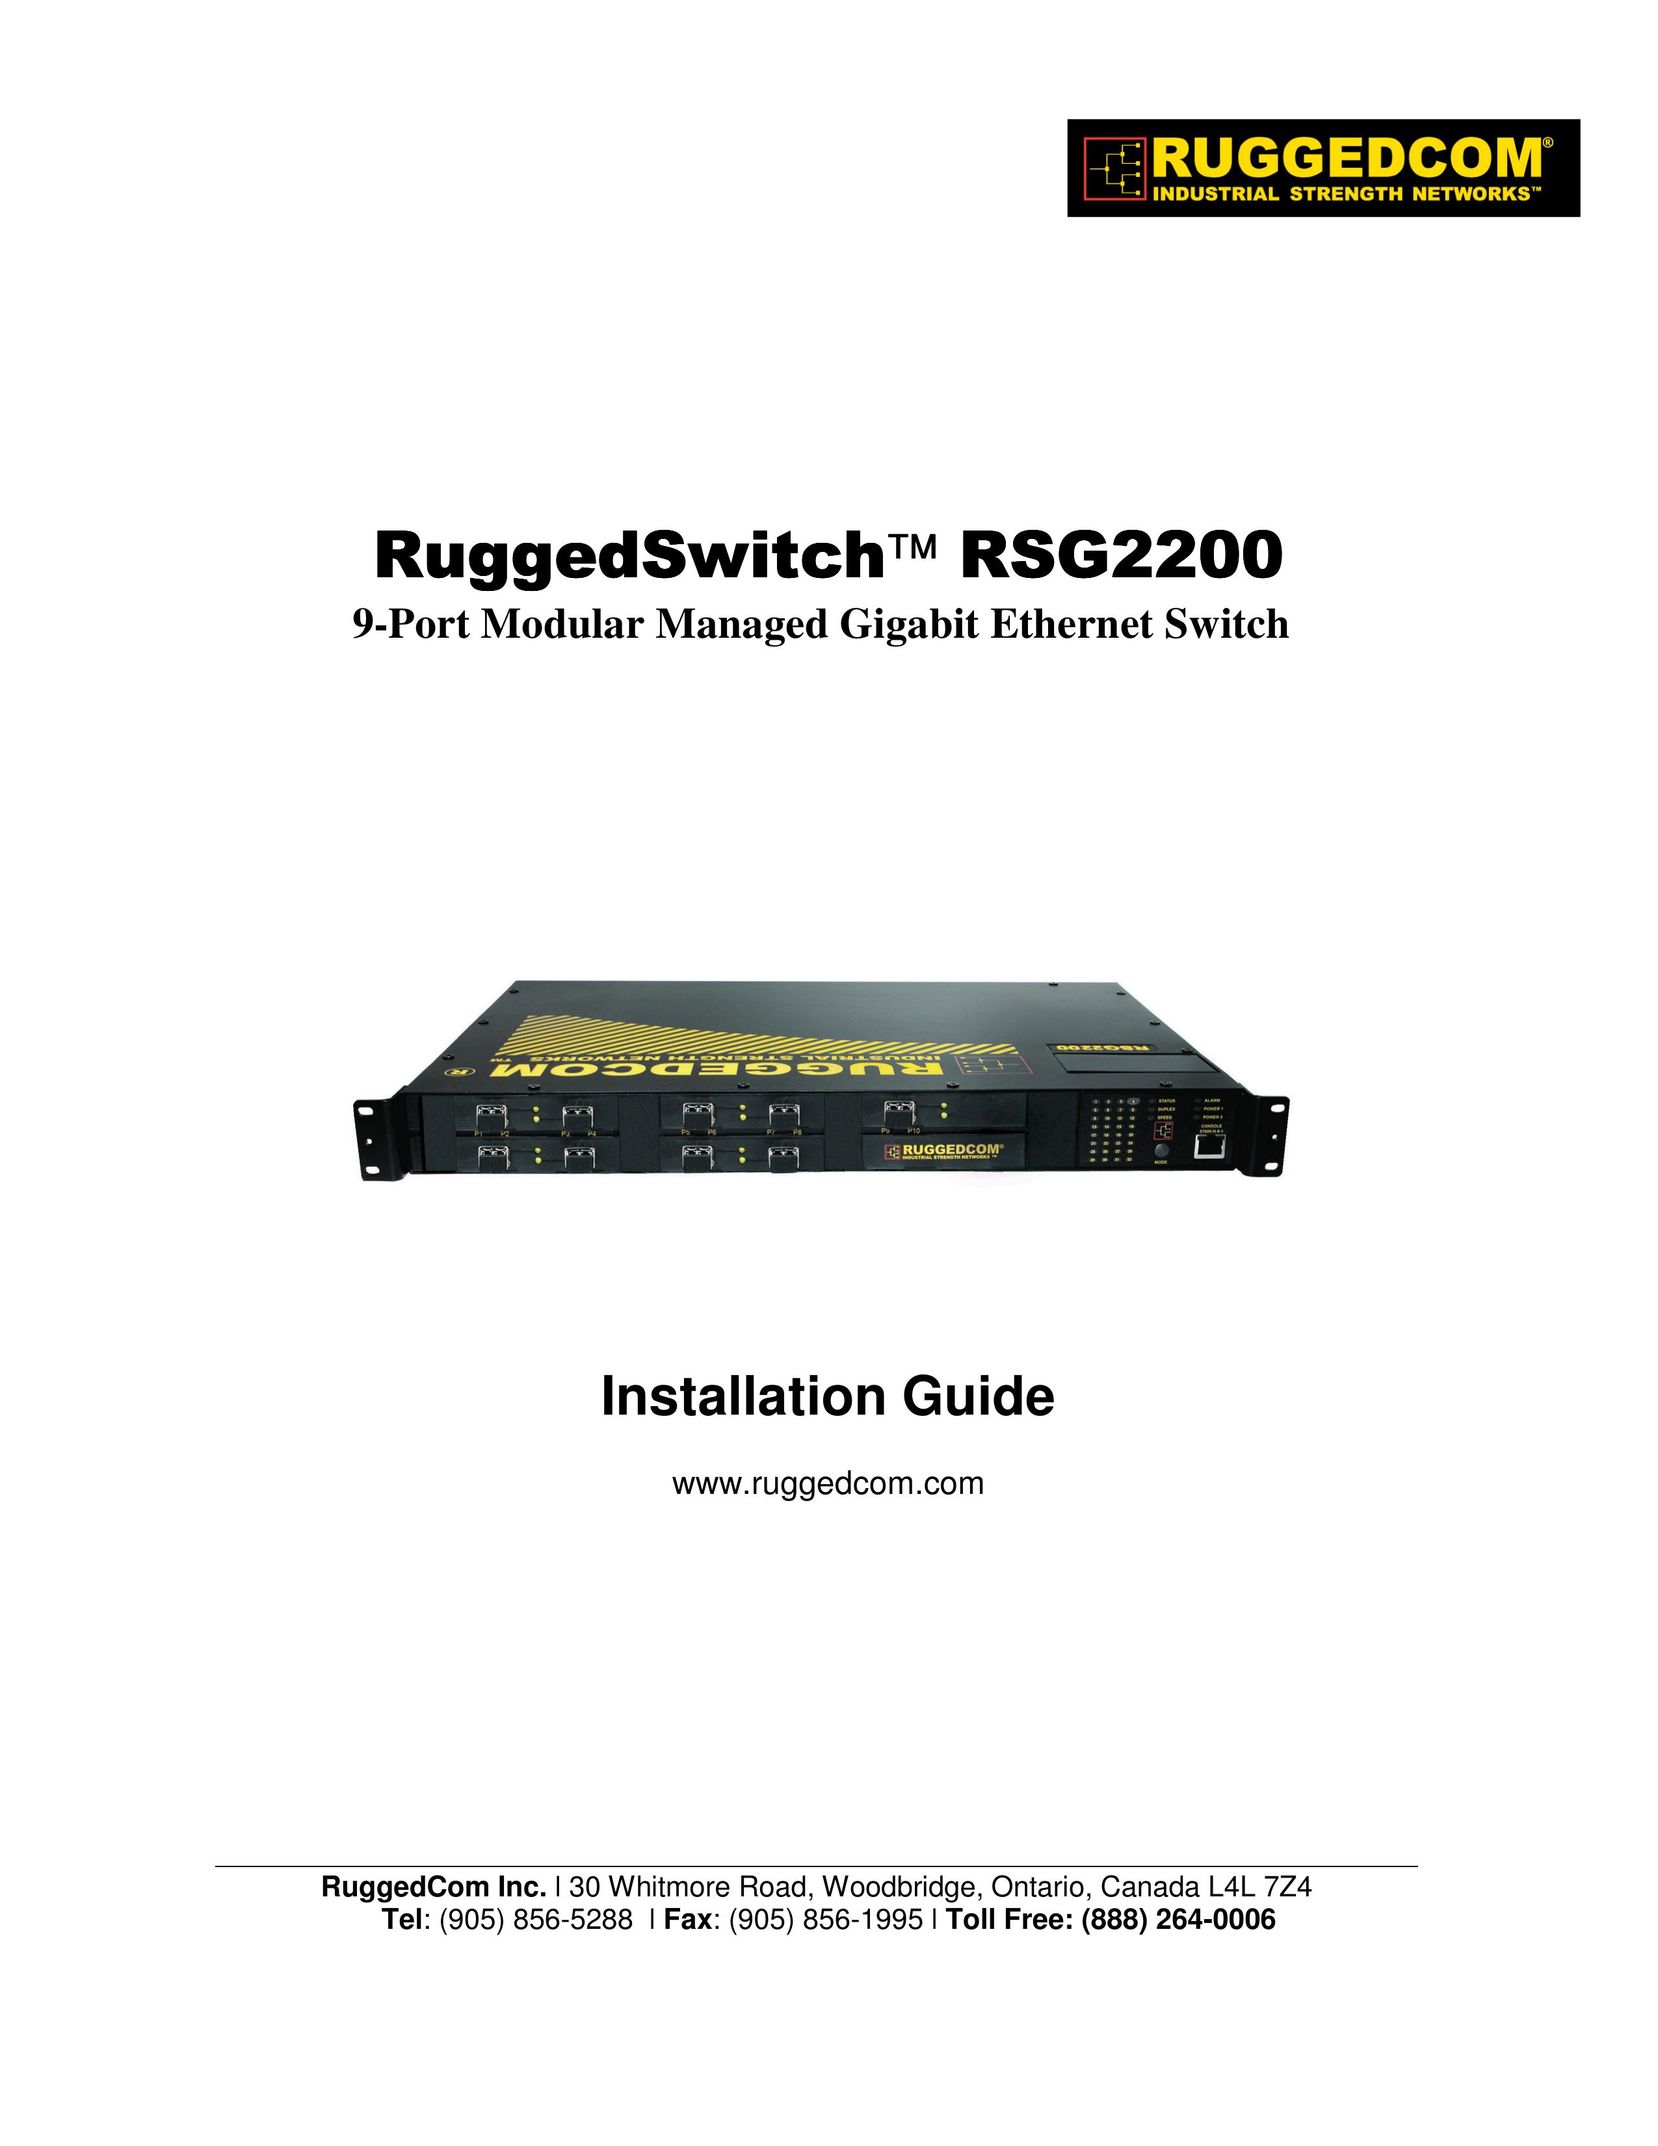 RuggedCom RSG2200 Switch User Manual